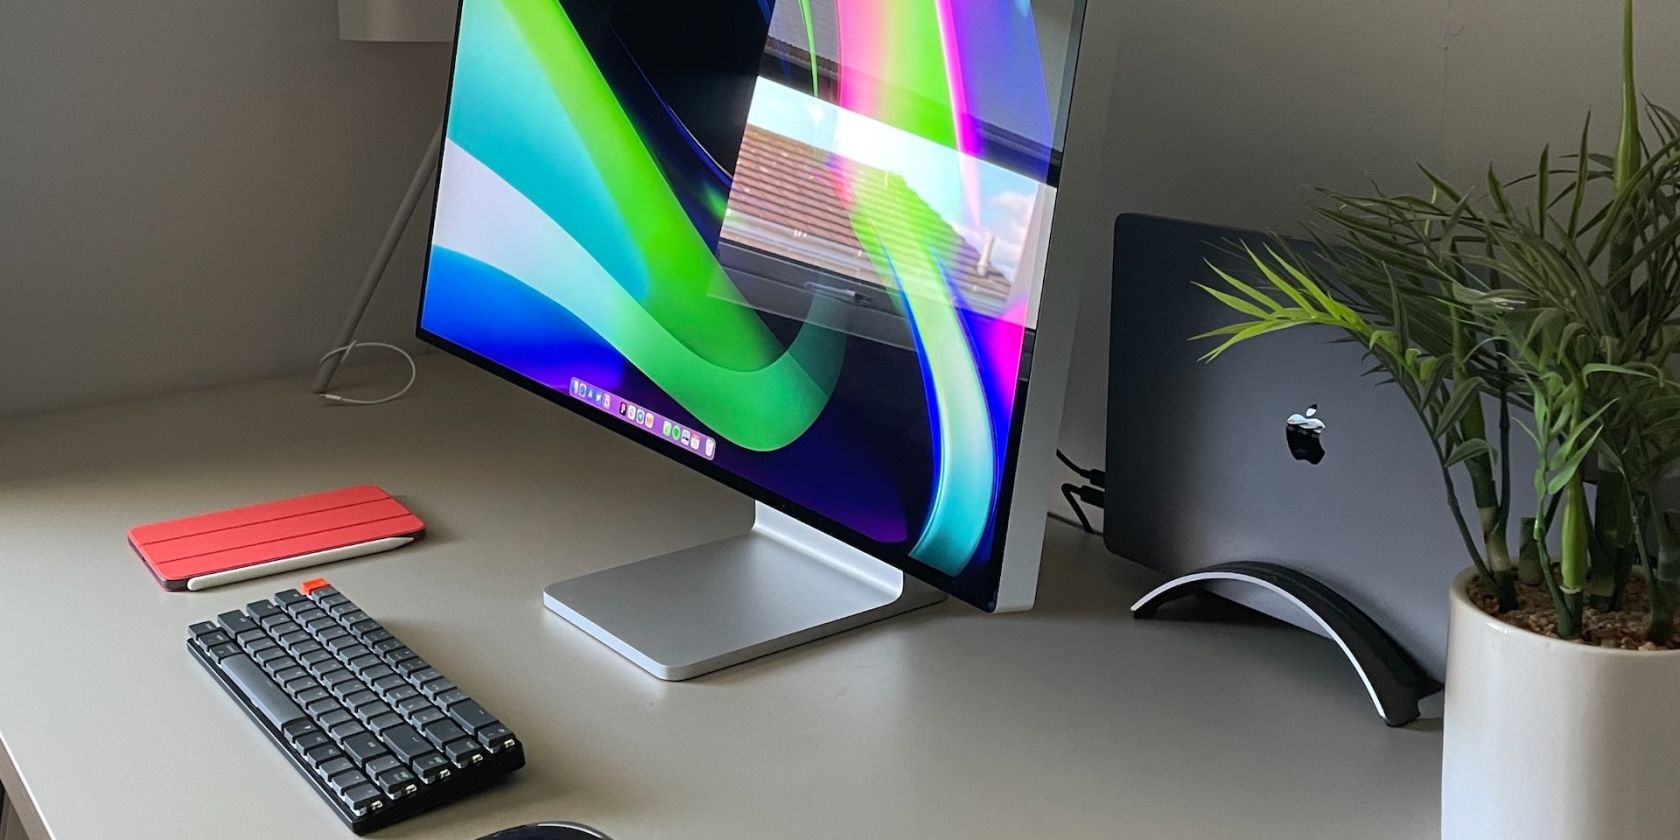 MacBook connected to an Apple Studio Display